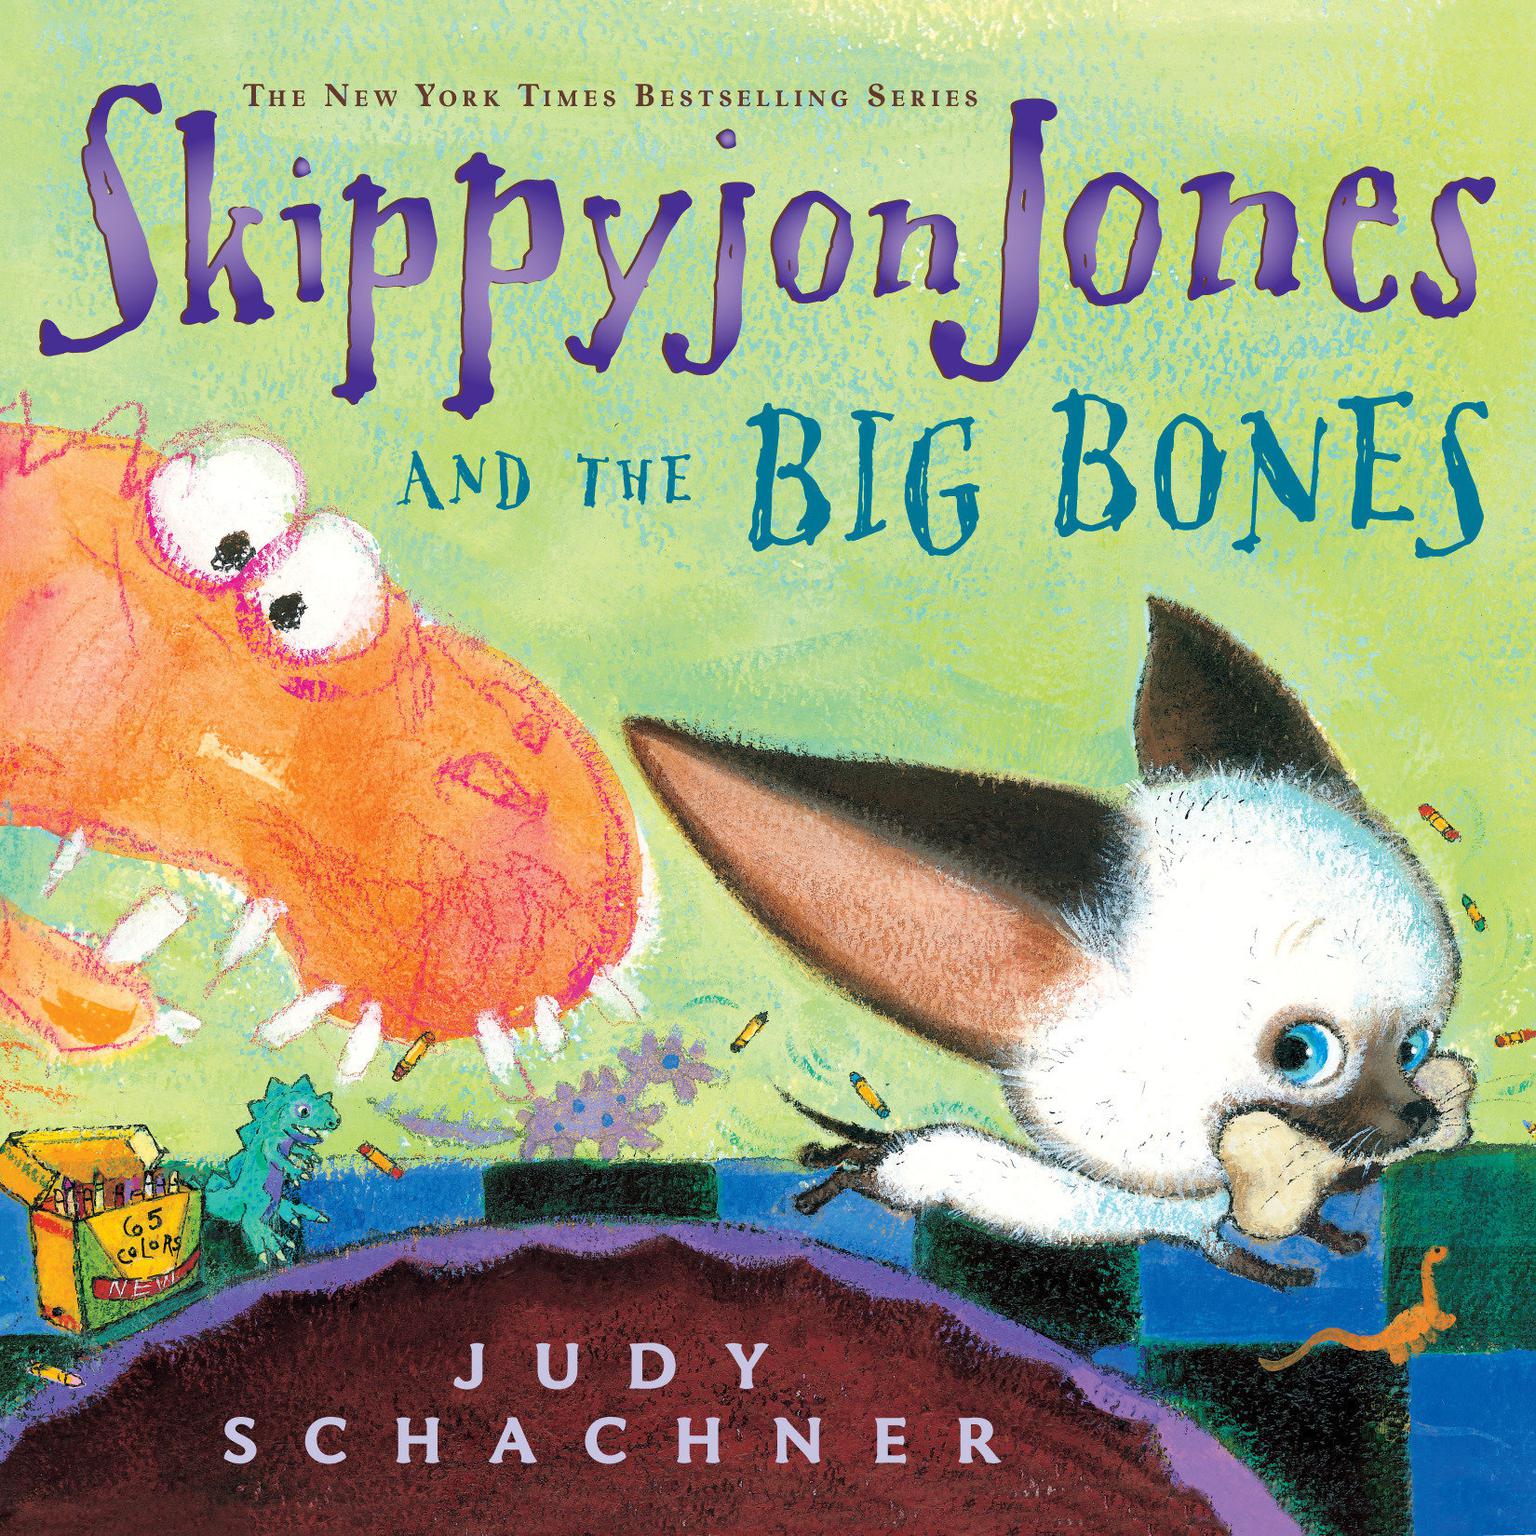 Skippyjon Jones and the Big Bones Audiobook, by Judy Schachner